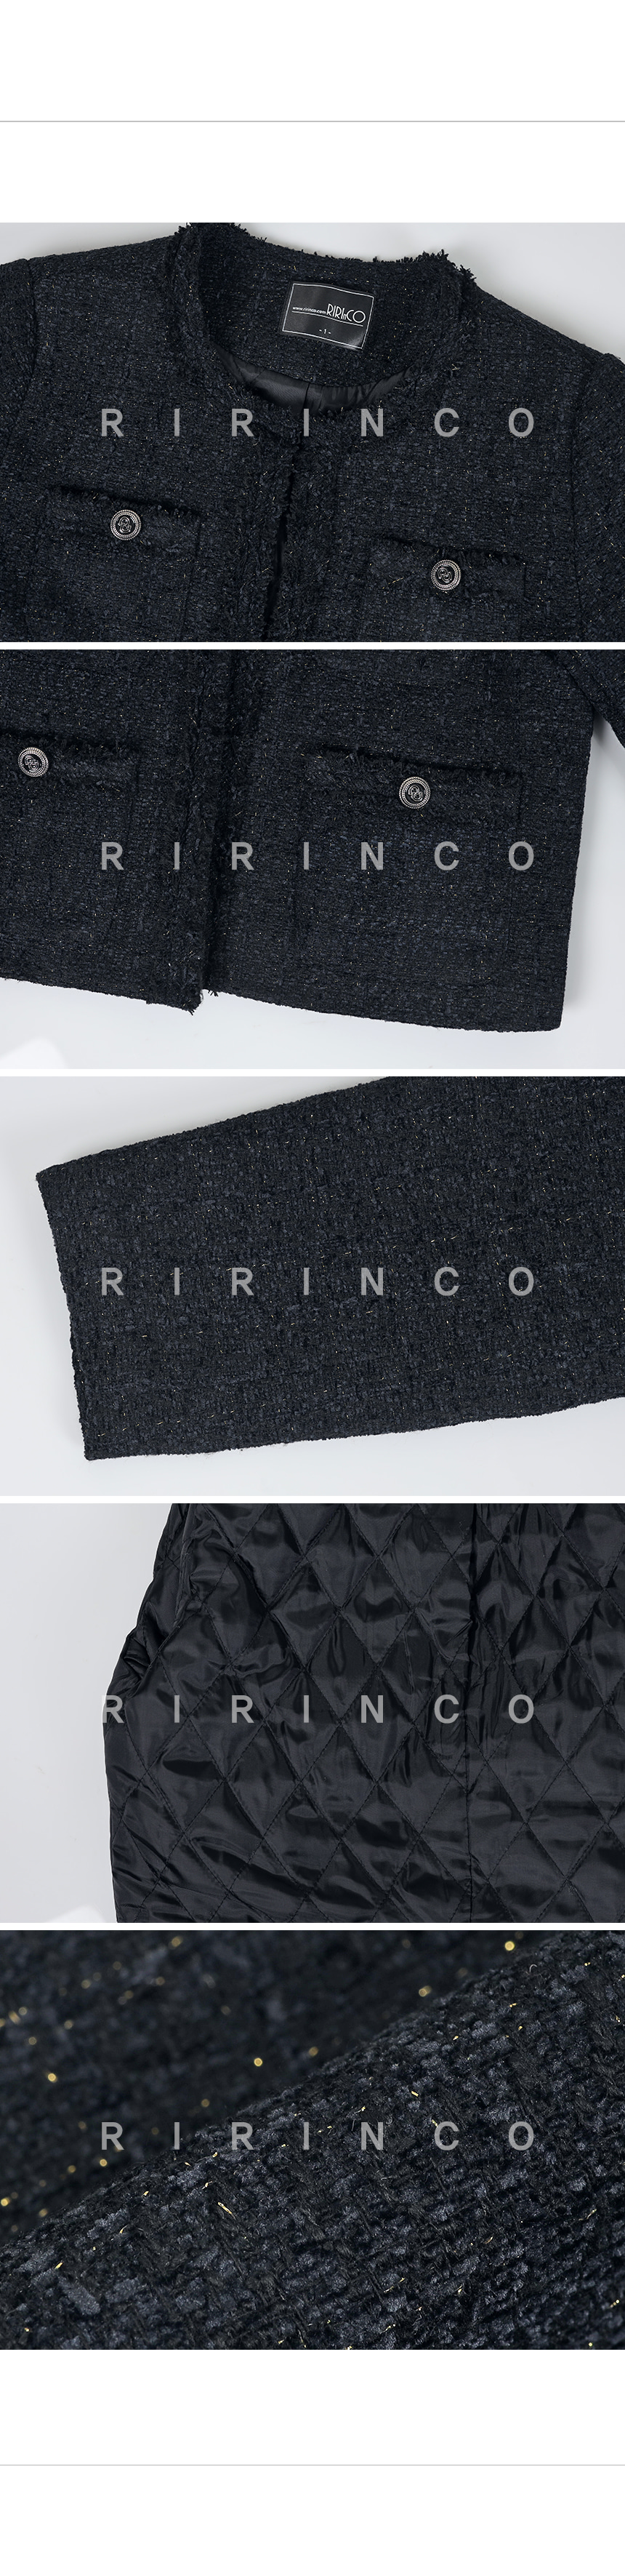 RIRINCO ツイードツーピースセミクロップドジャケット(キルティング裏地)